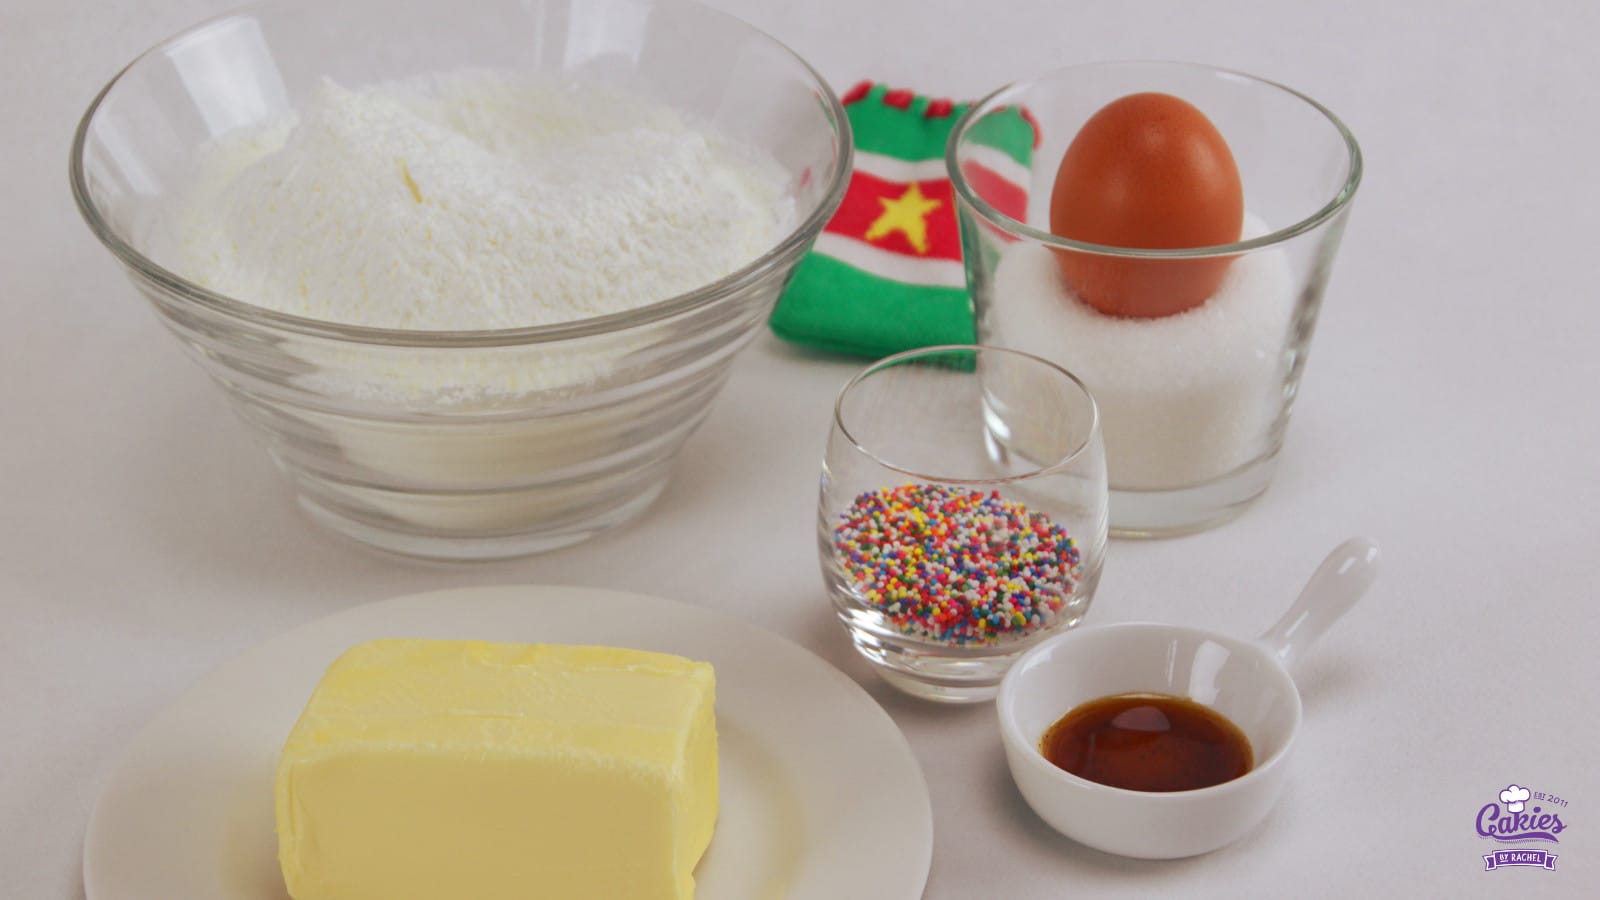 Surinamese Cornflour Cookies Recipe - Step 1